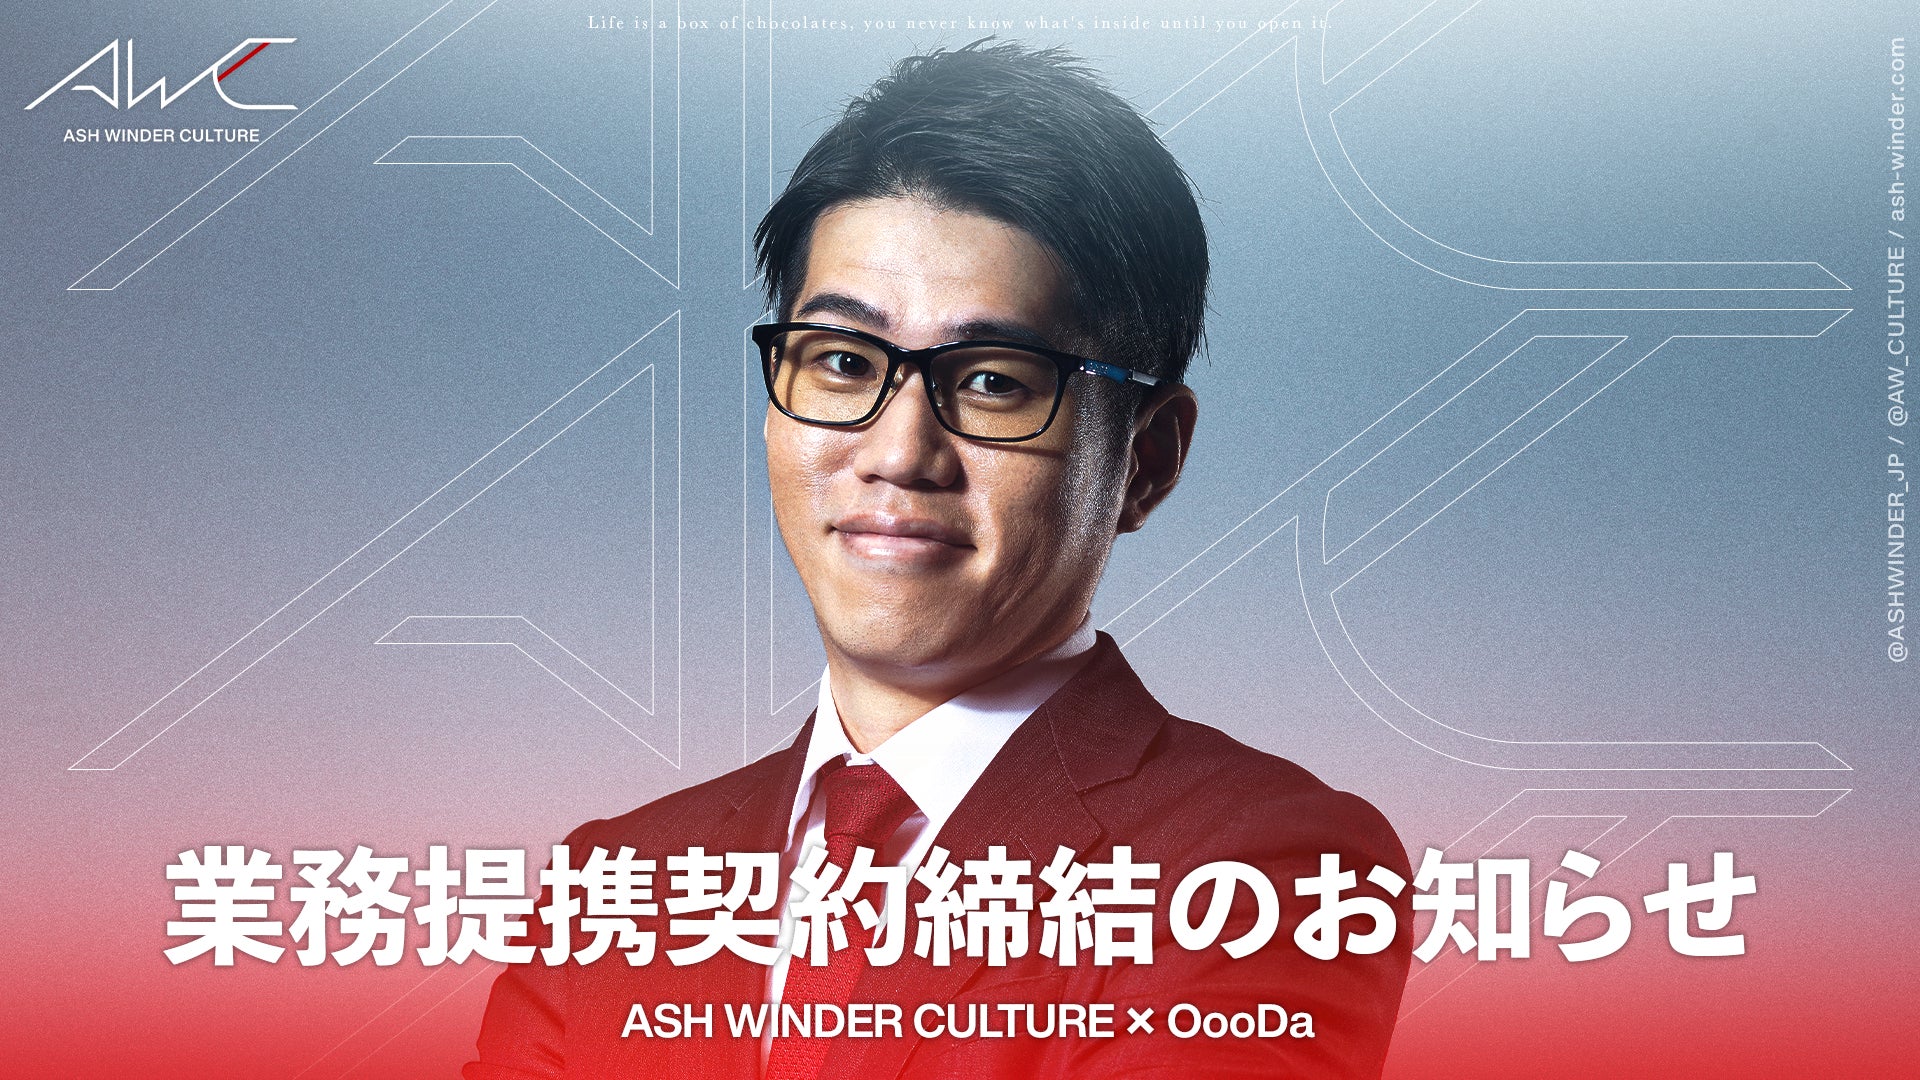 「ASH WINDER CULTURE」を展開する株式会社ASH WINDERが、eスポーツキャスター「OooDa」と業務提携契約を締結